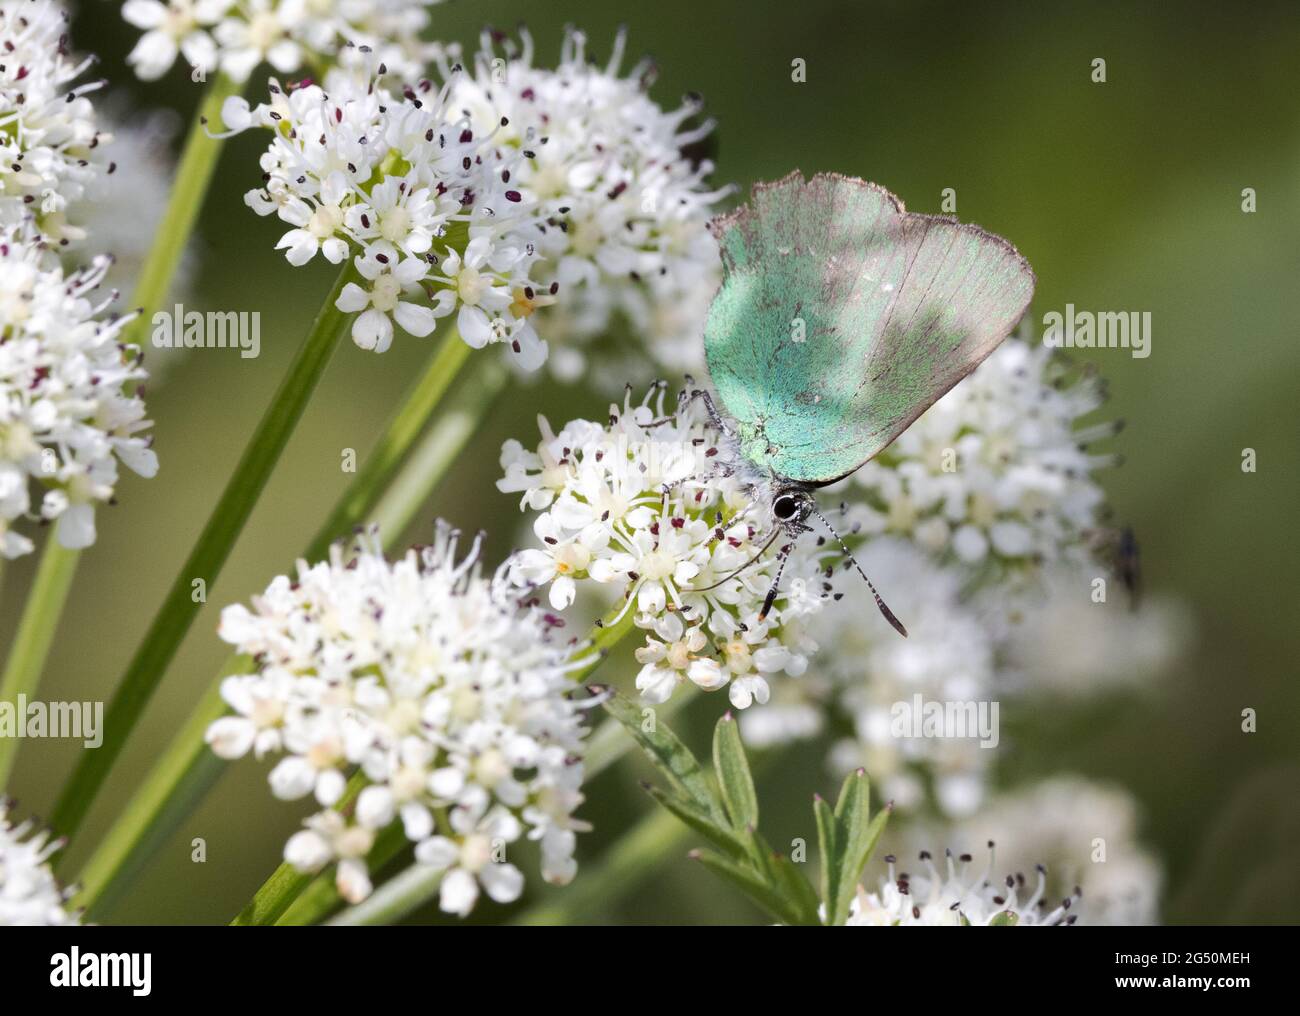 British butterflies; The Green Hairstreak butterfly, Callophrys rubi, Wales UK Stock Photo